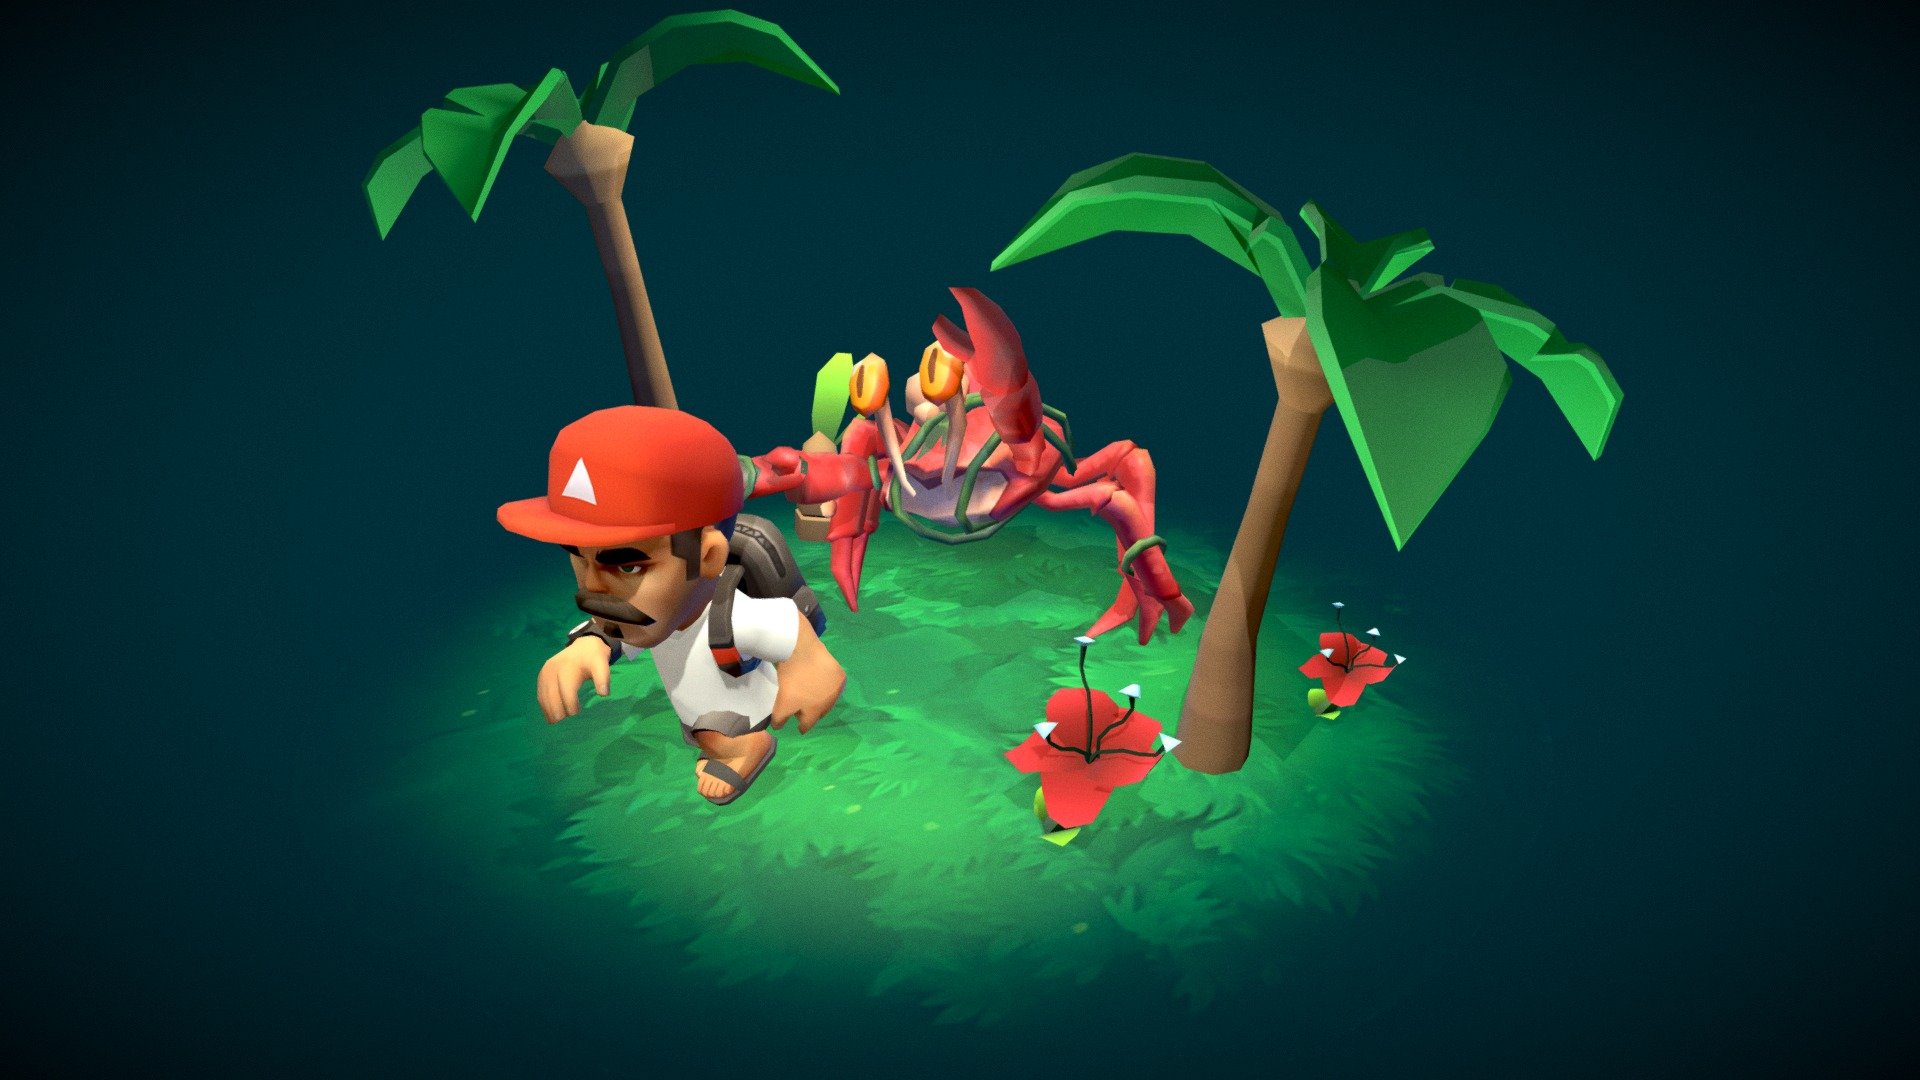 Red machine games - Epic raft game
Animator - Vitaly Kuznetsov - Crab chasing scene - 3D model by bestgamekits 3d model